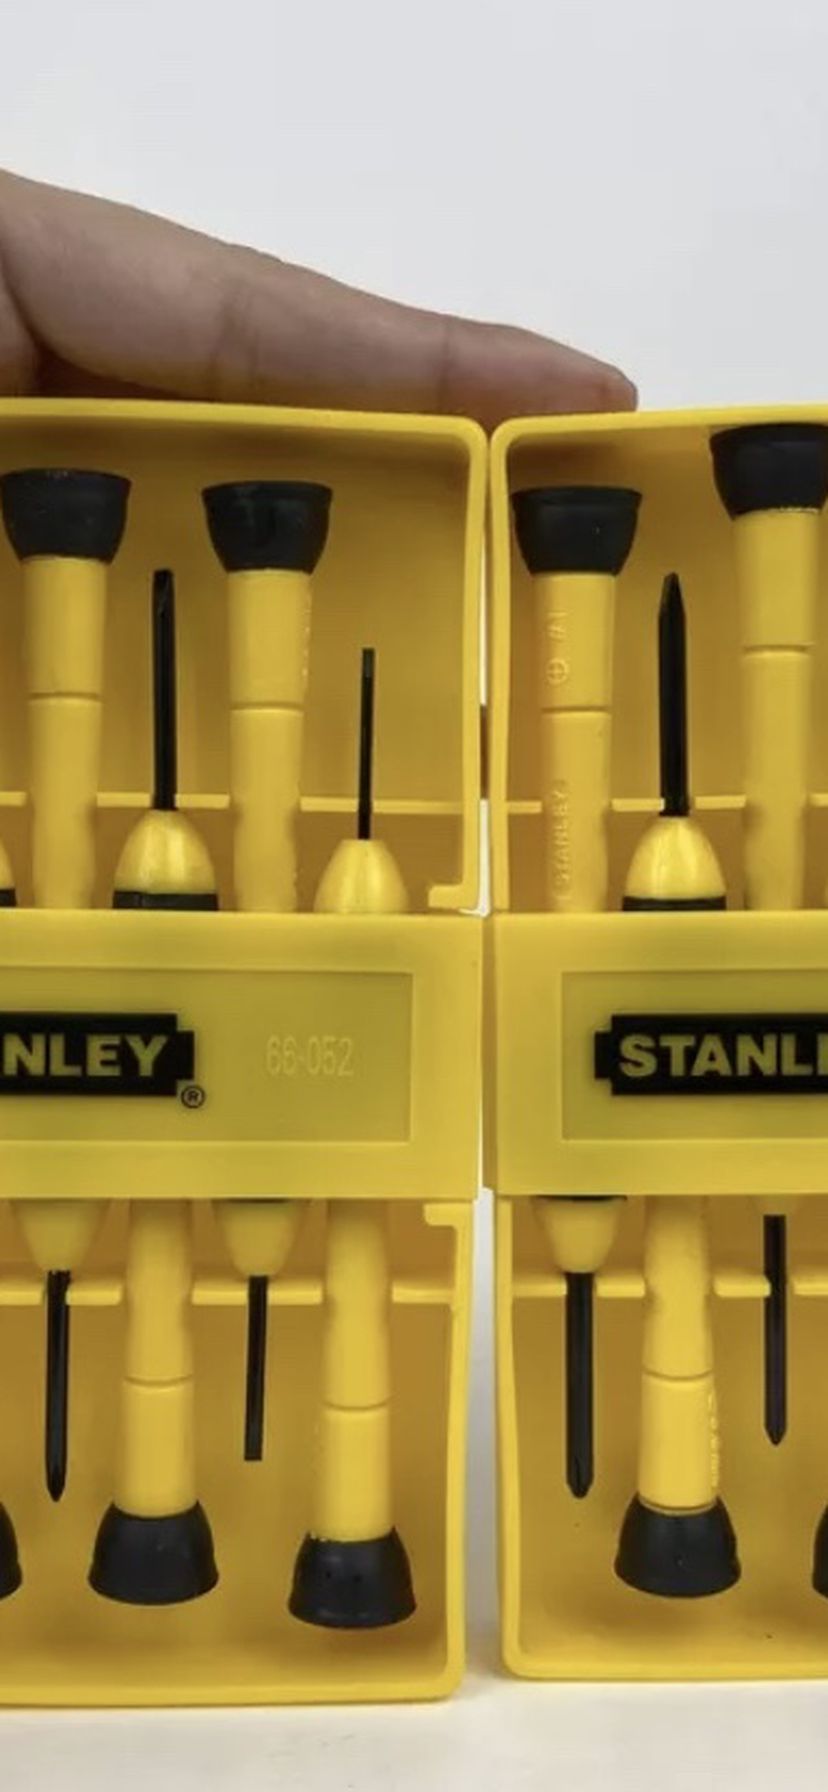 2-Stanley Tools 6 Piece Precision Screwdriver Set, Black/Yellow 66-052 Free Ship